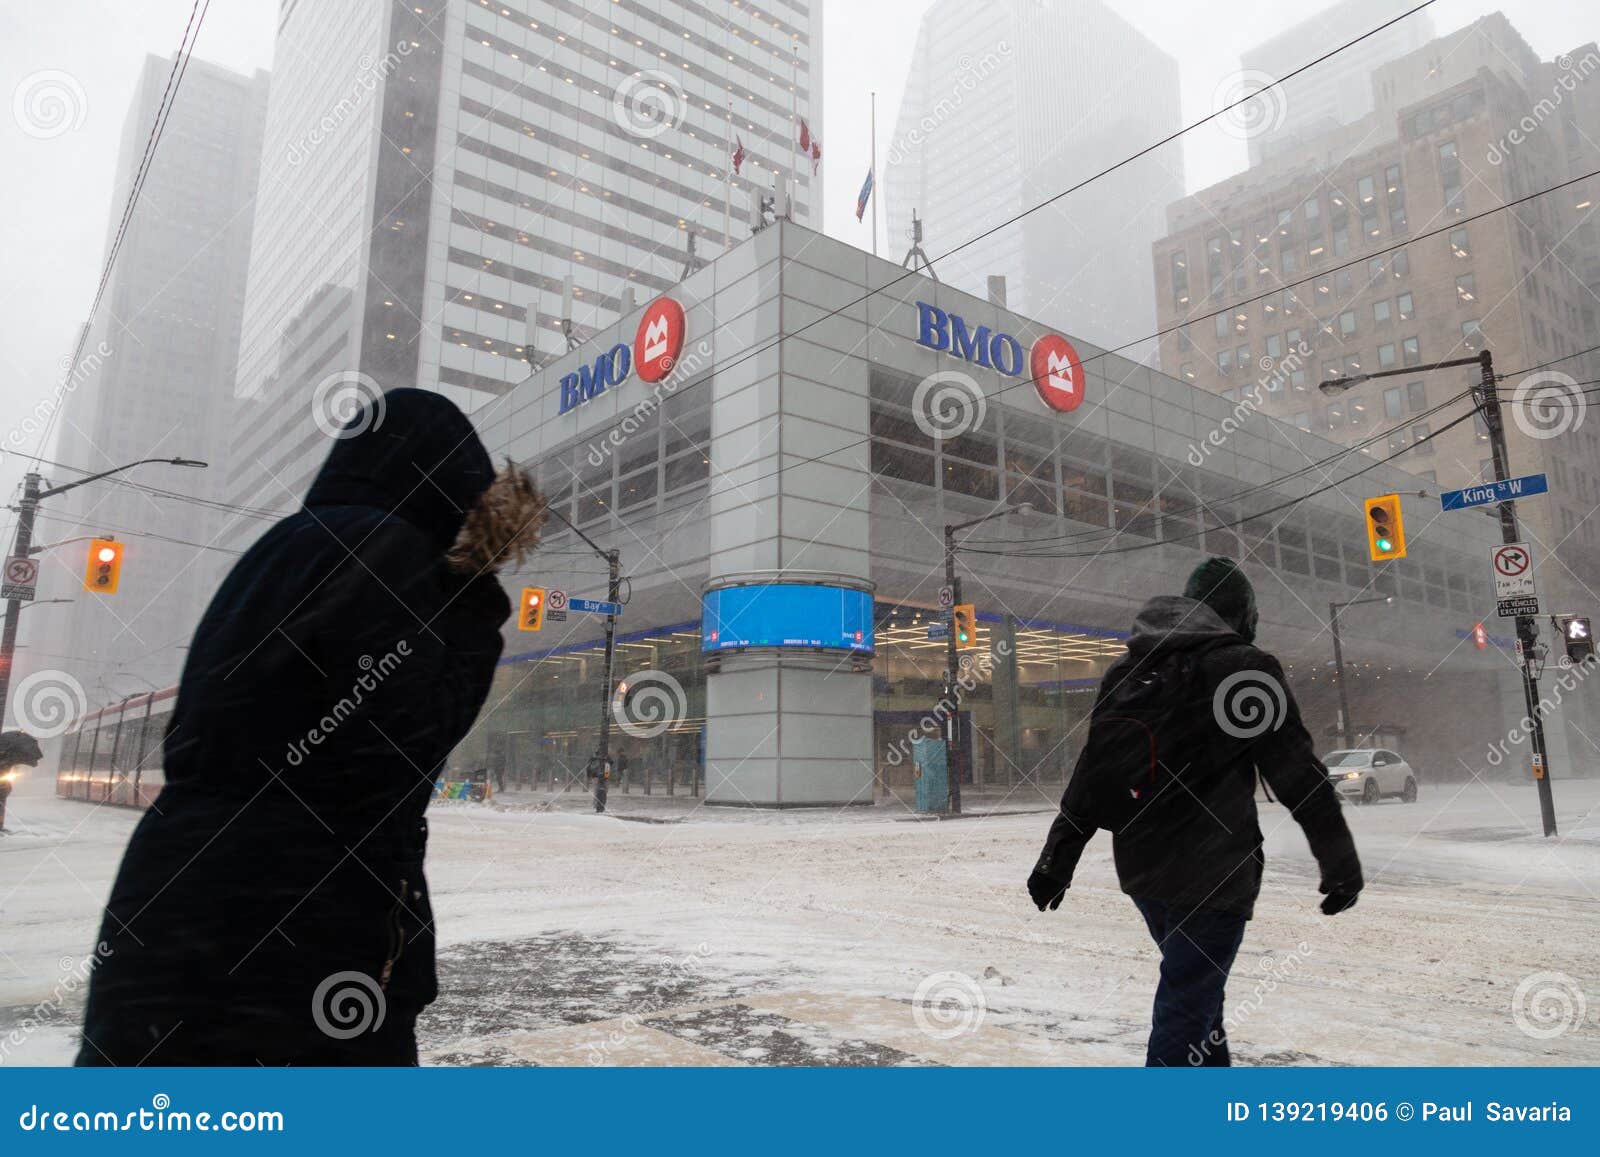 Bmo Bank Of Montreal Snow Storm Canada Toronto Feb 12 2019 4